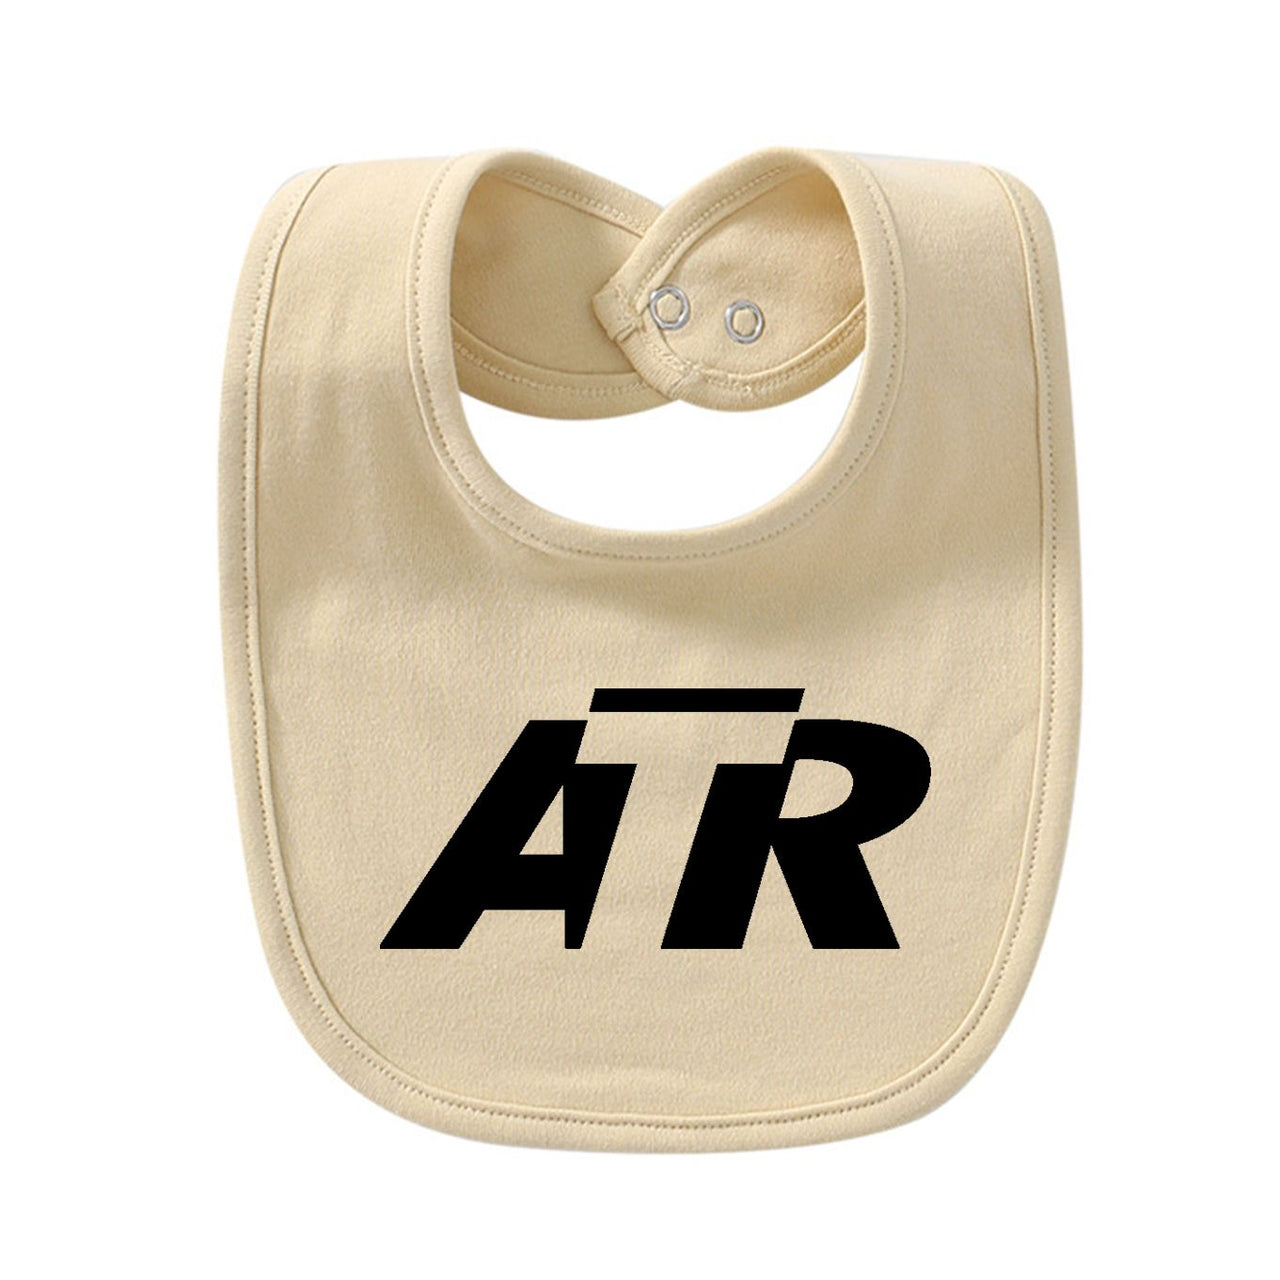 ATR & Text Designed Baby Saliva & Feeding Towels